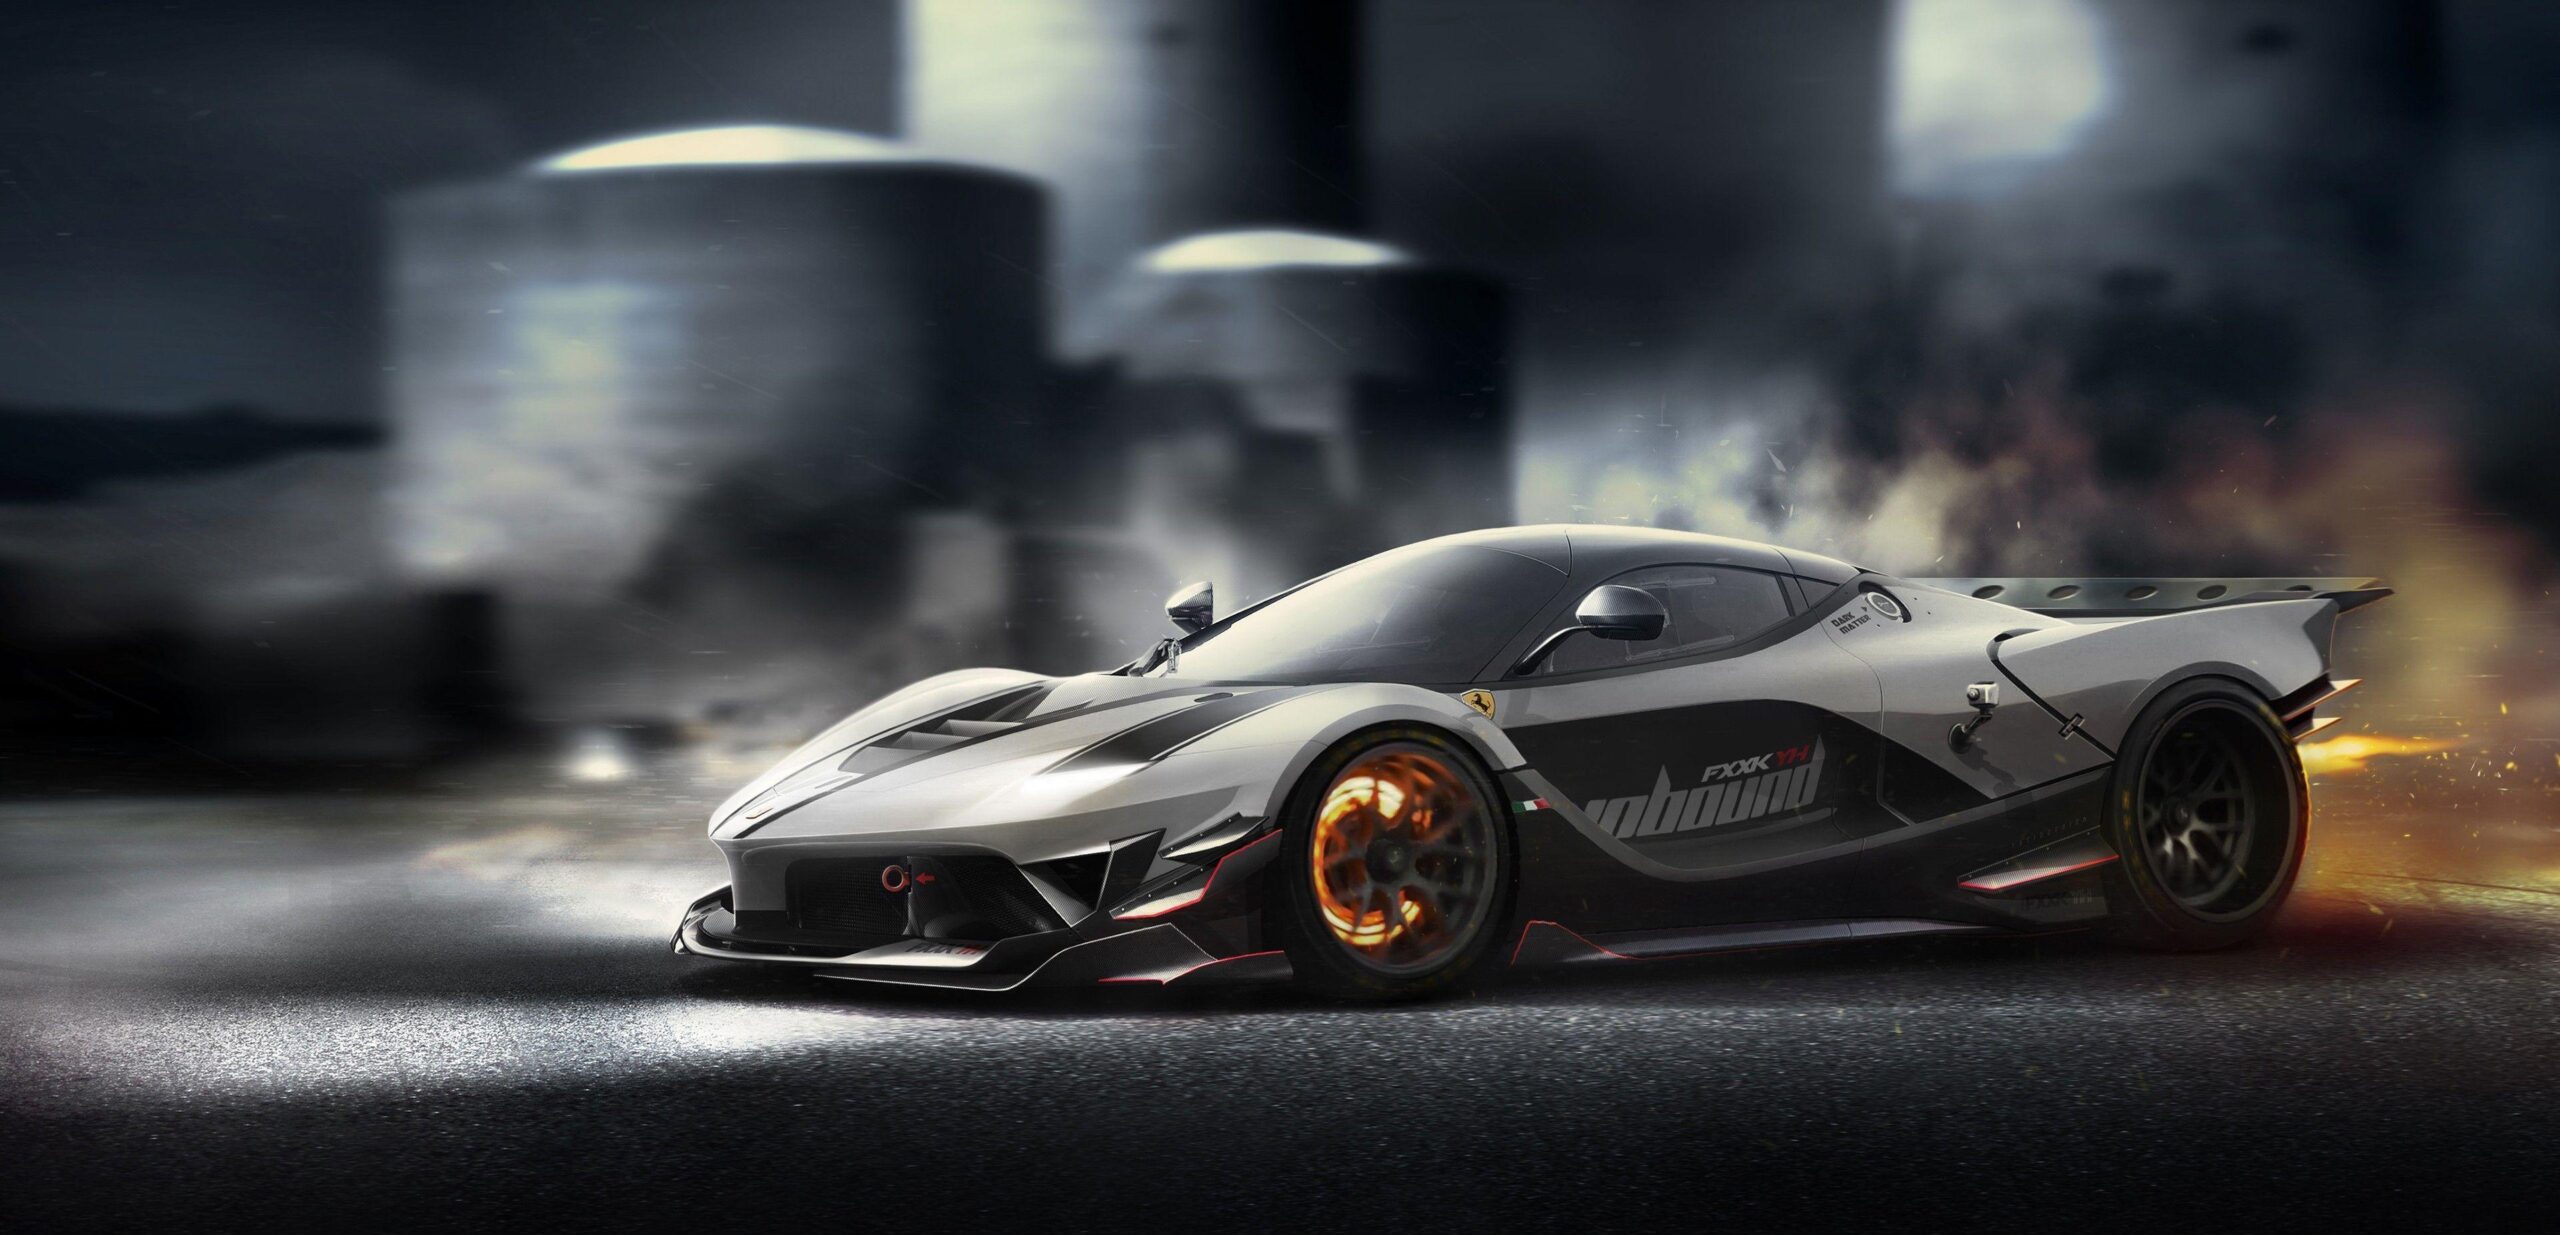 Ferrari fxxk car motion blur wallpapers and backgrounds